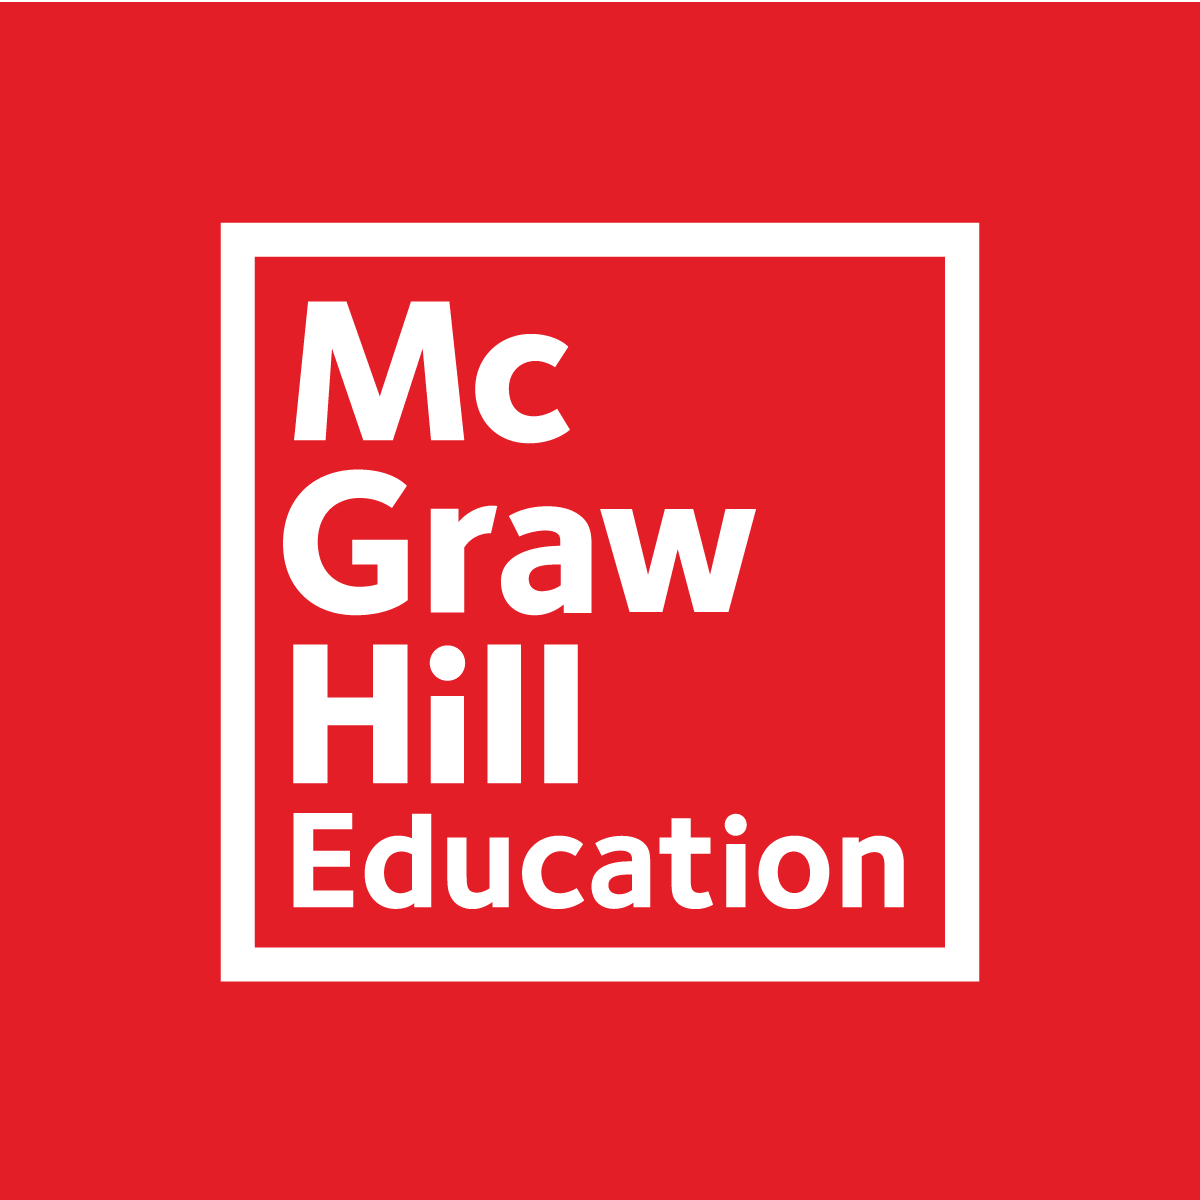 Education App Logo - McGraw-Hill Education